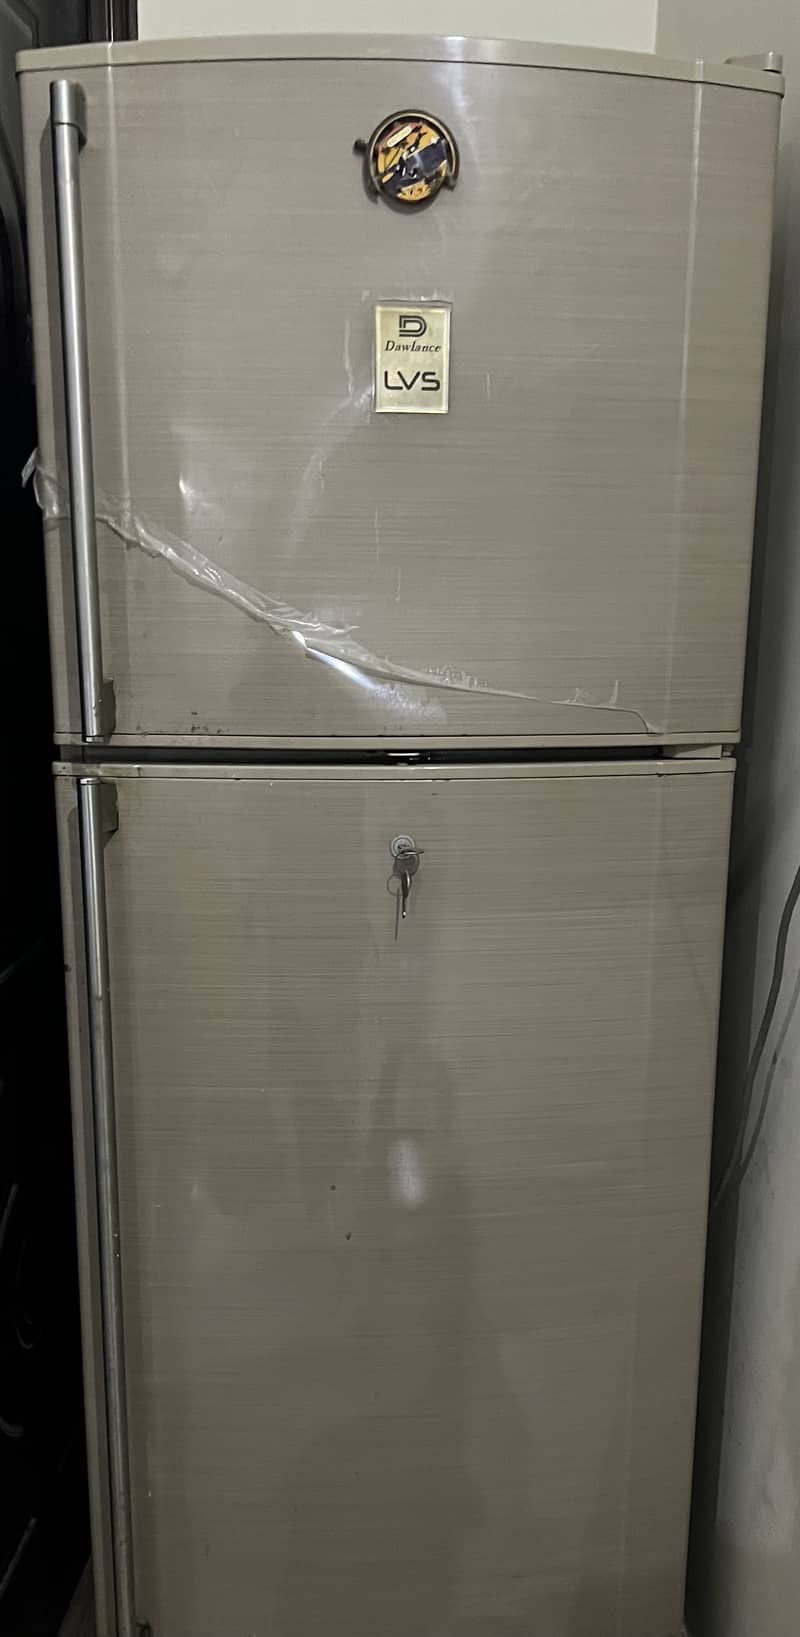 Good condition Downlance LVS Refrigerator 0